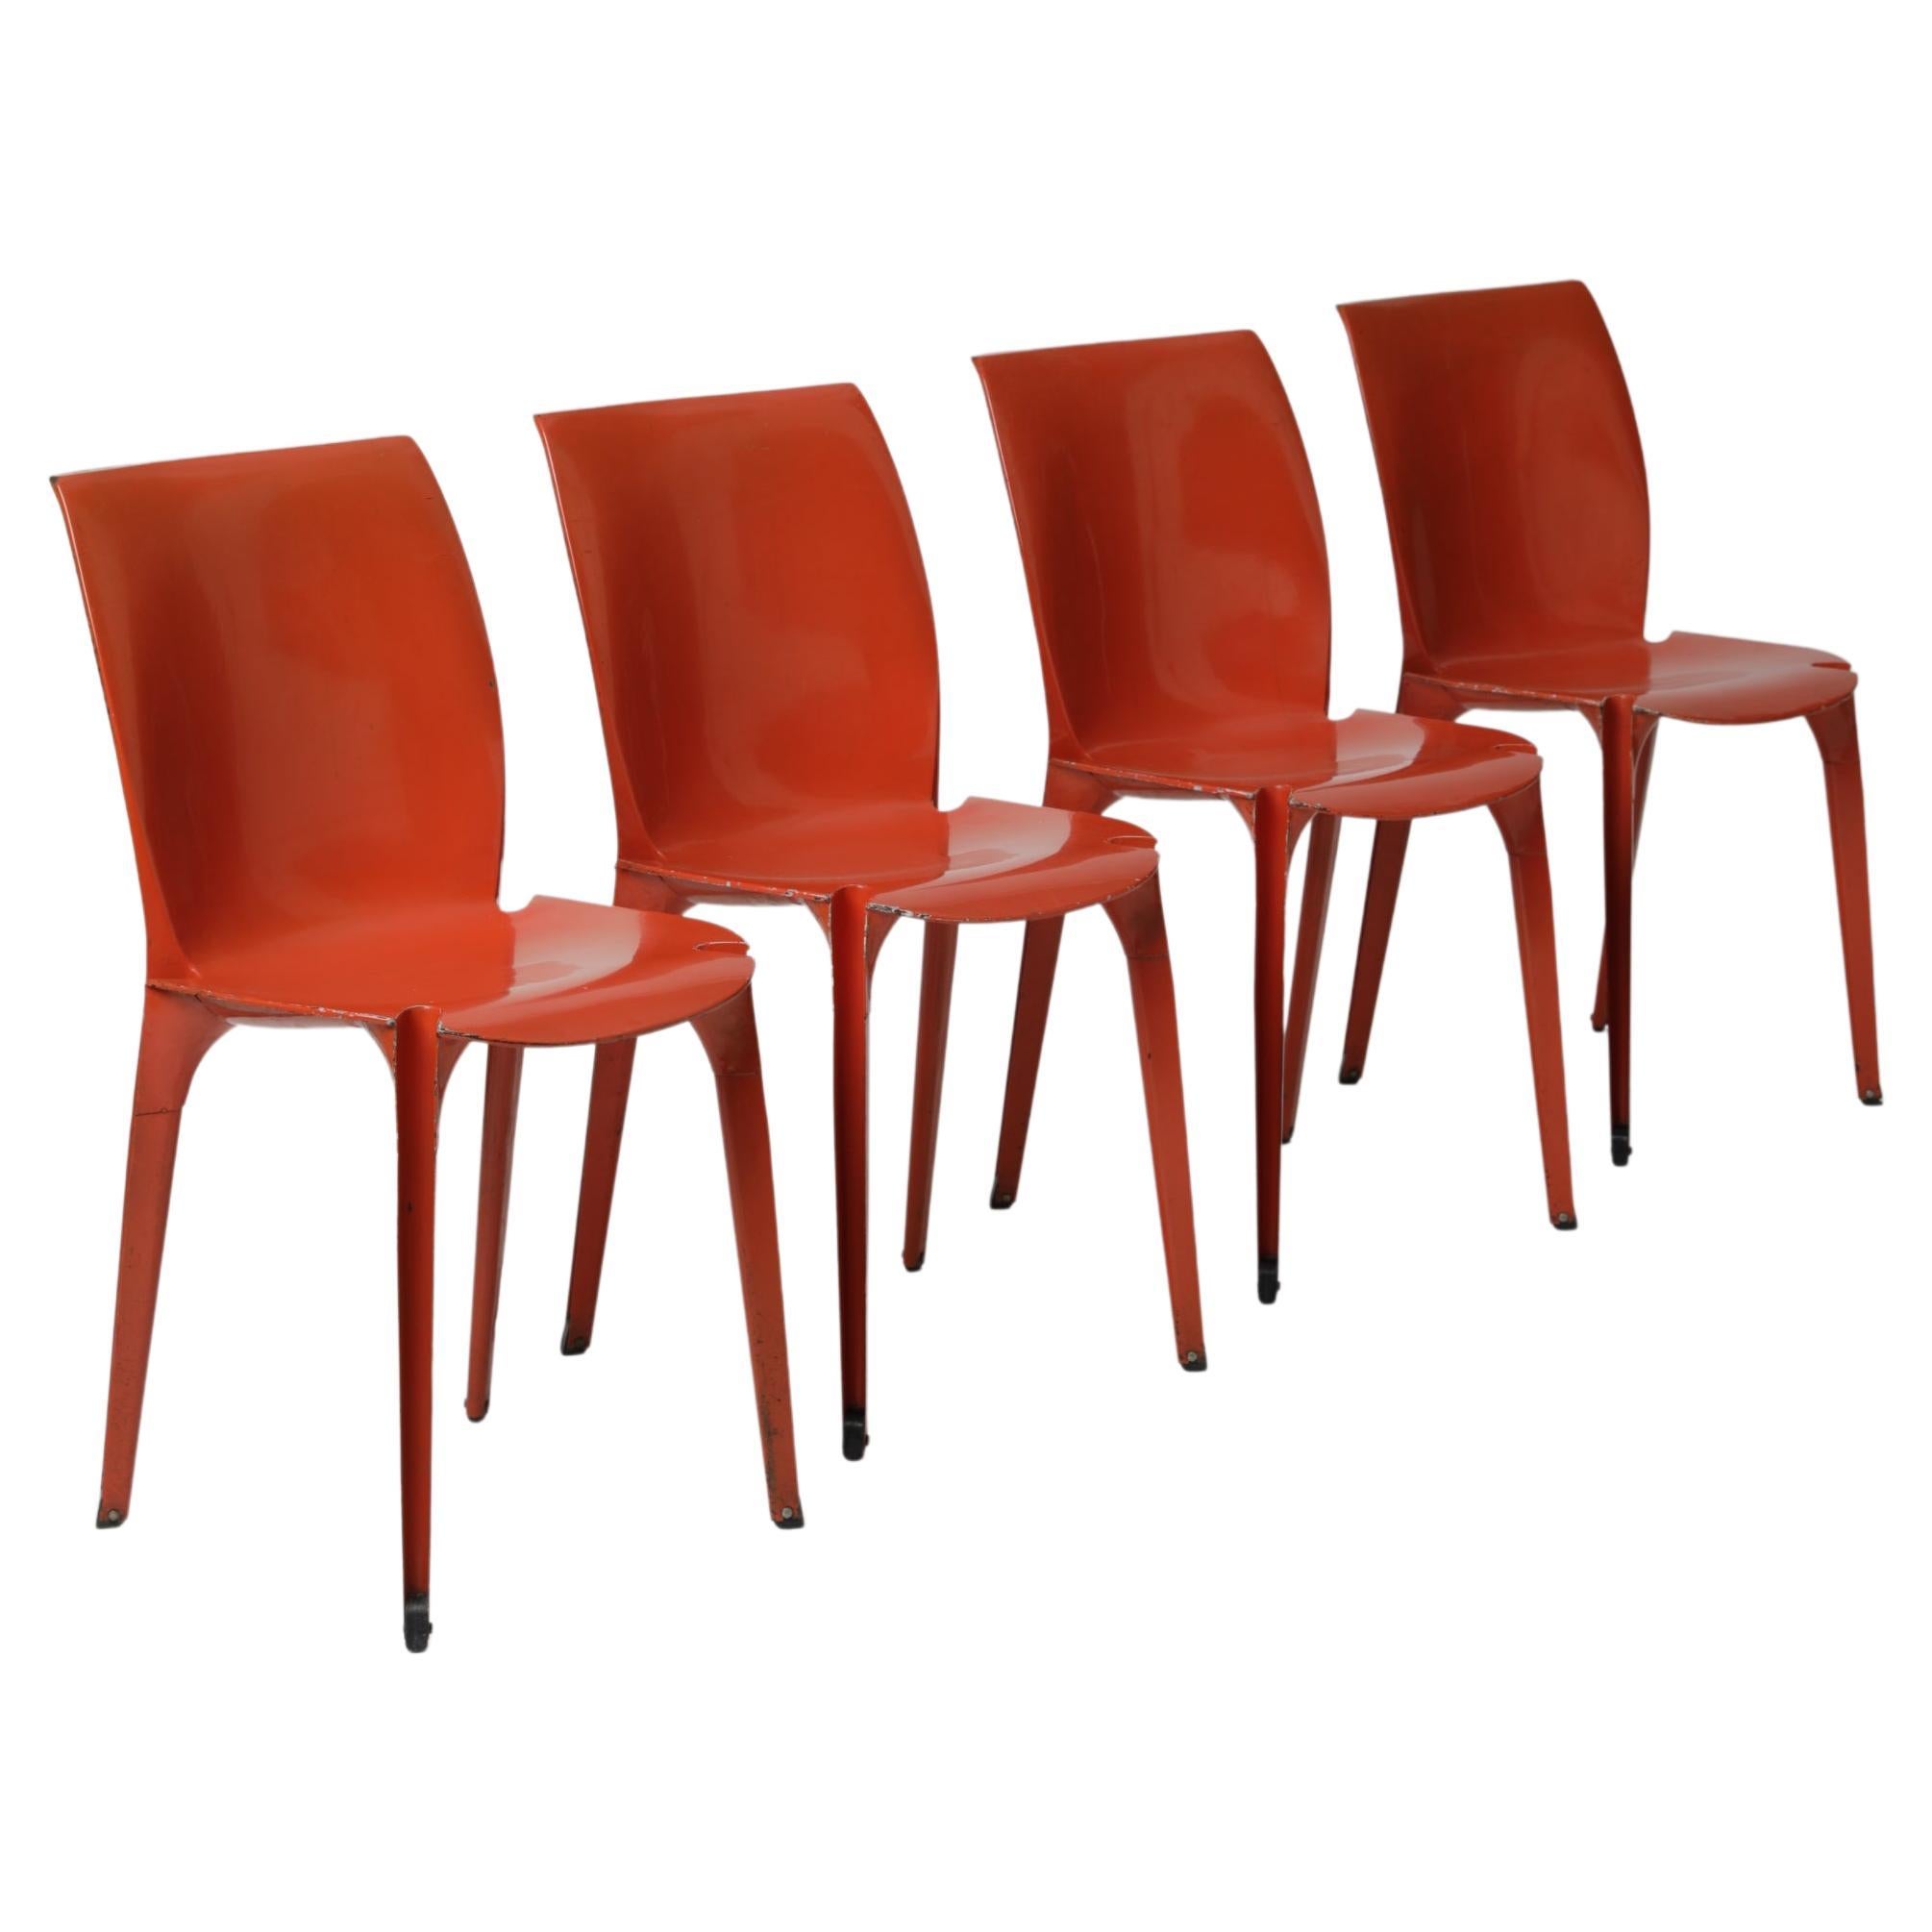 Marco Zanuso & Richard Sapper,  ‘Lambda’ Chairs, Gavina Production, Italy, 1959 For Sale